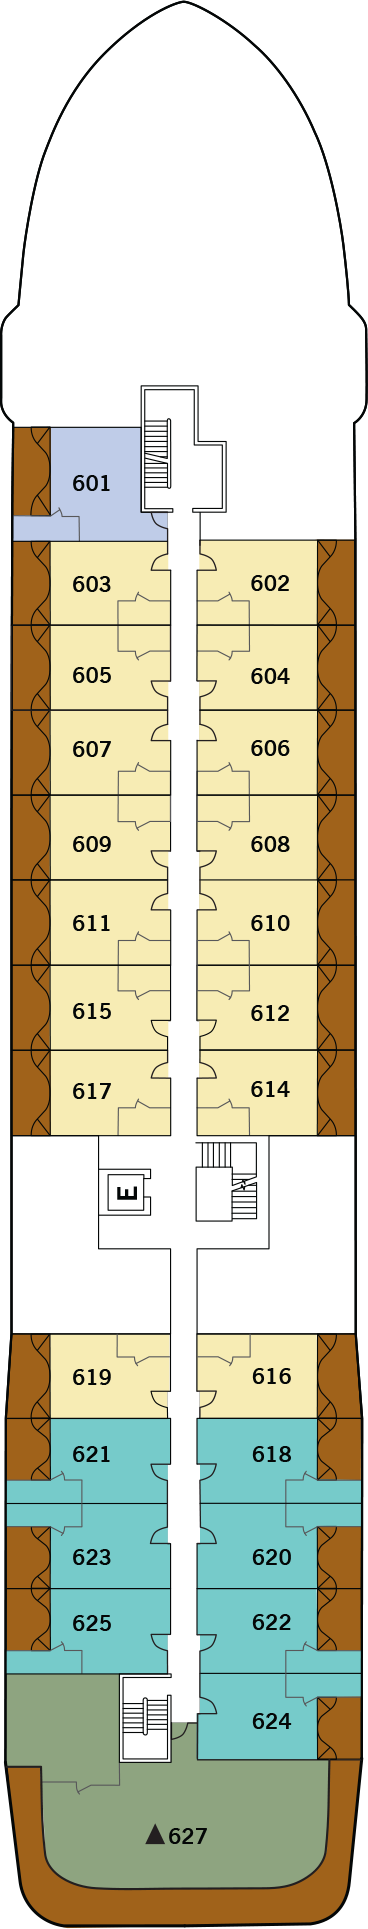 Deck 6: Deck 6